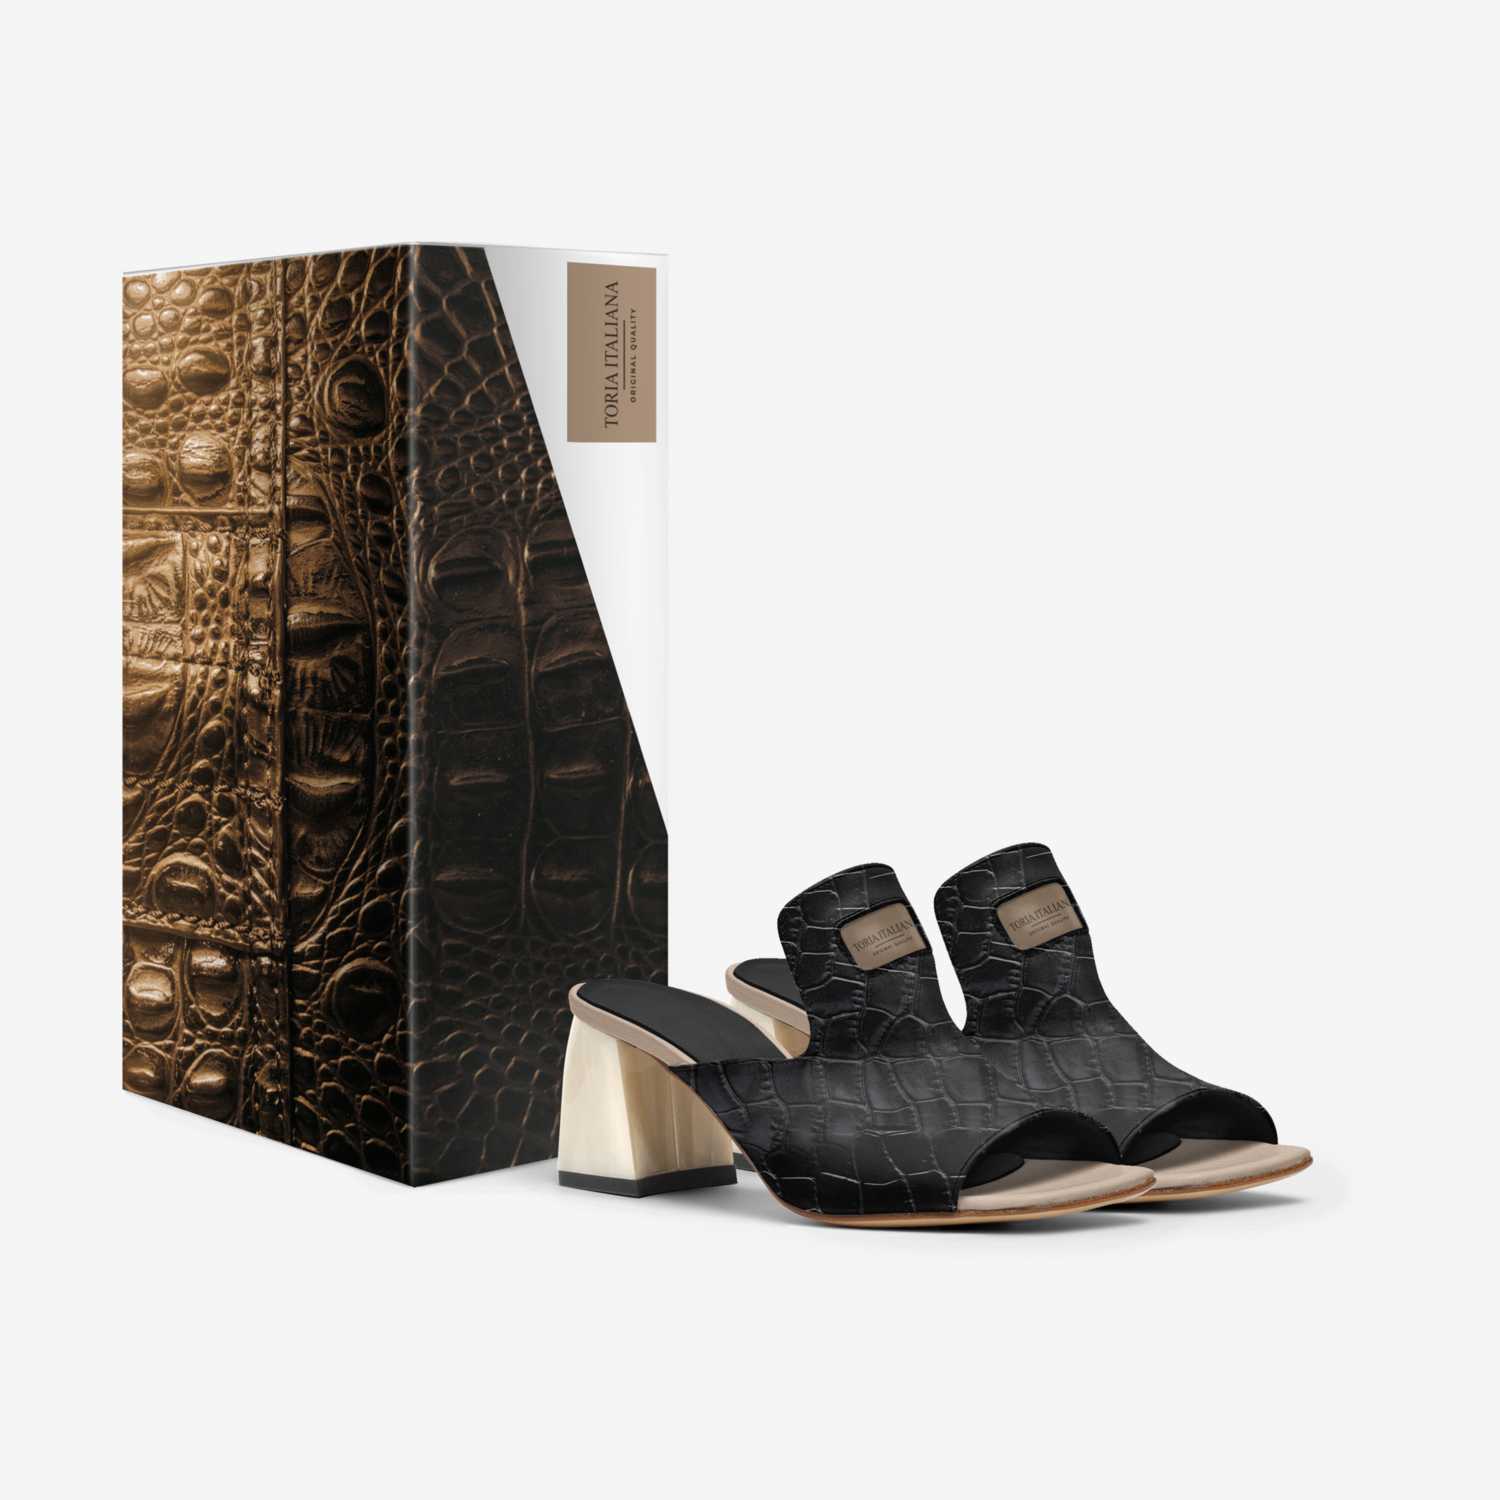 Toria Italiana custom made in Italy shoes by Victoria Coston | Box view